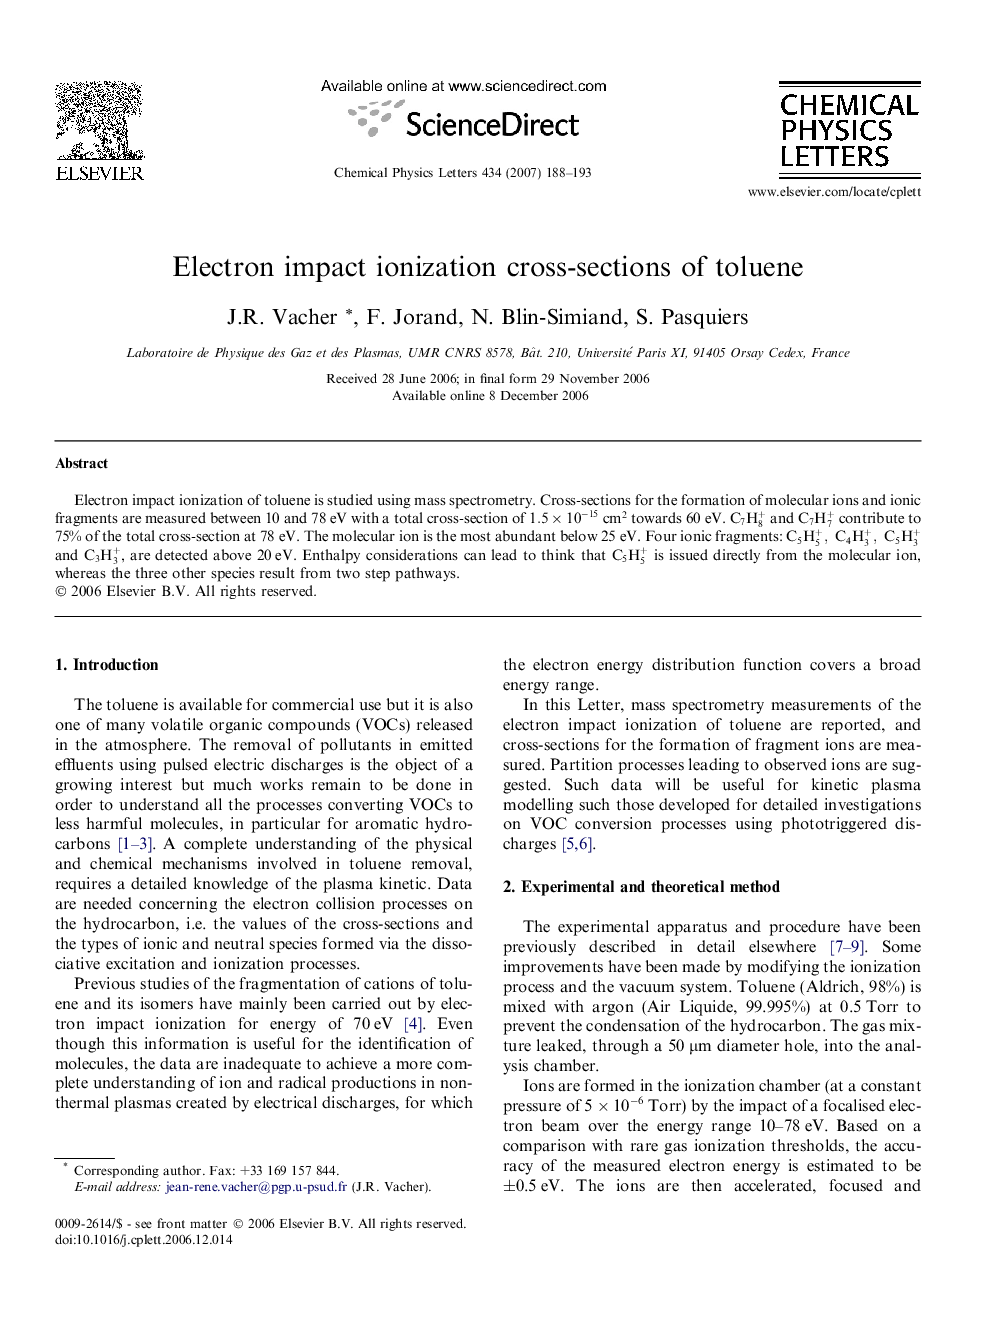 Electron impact ionization cross-sections of toluene